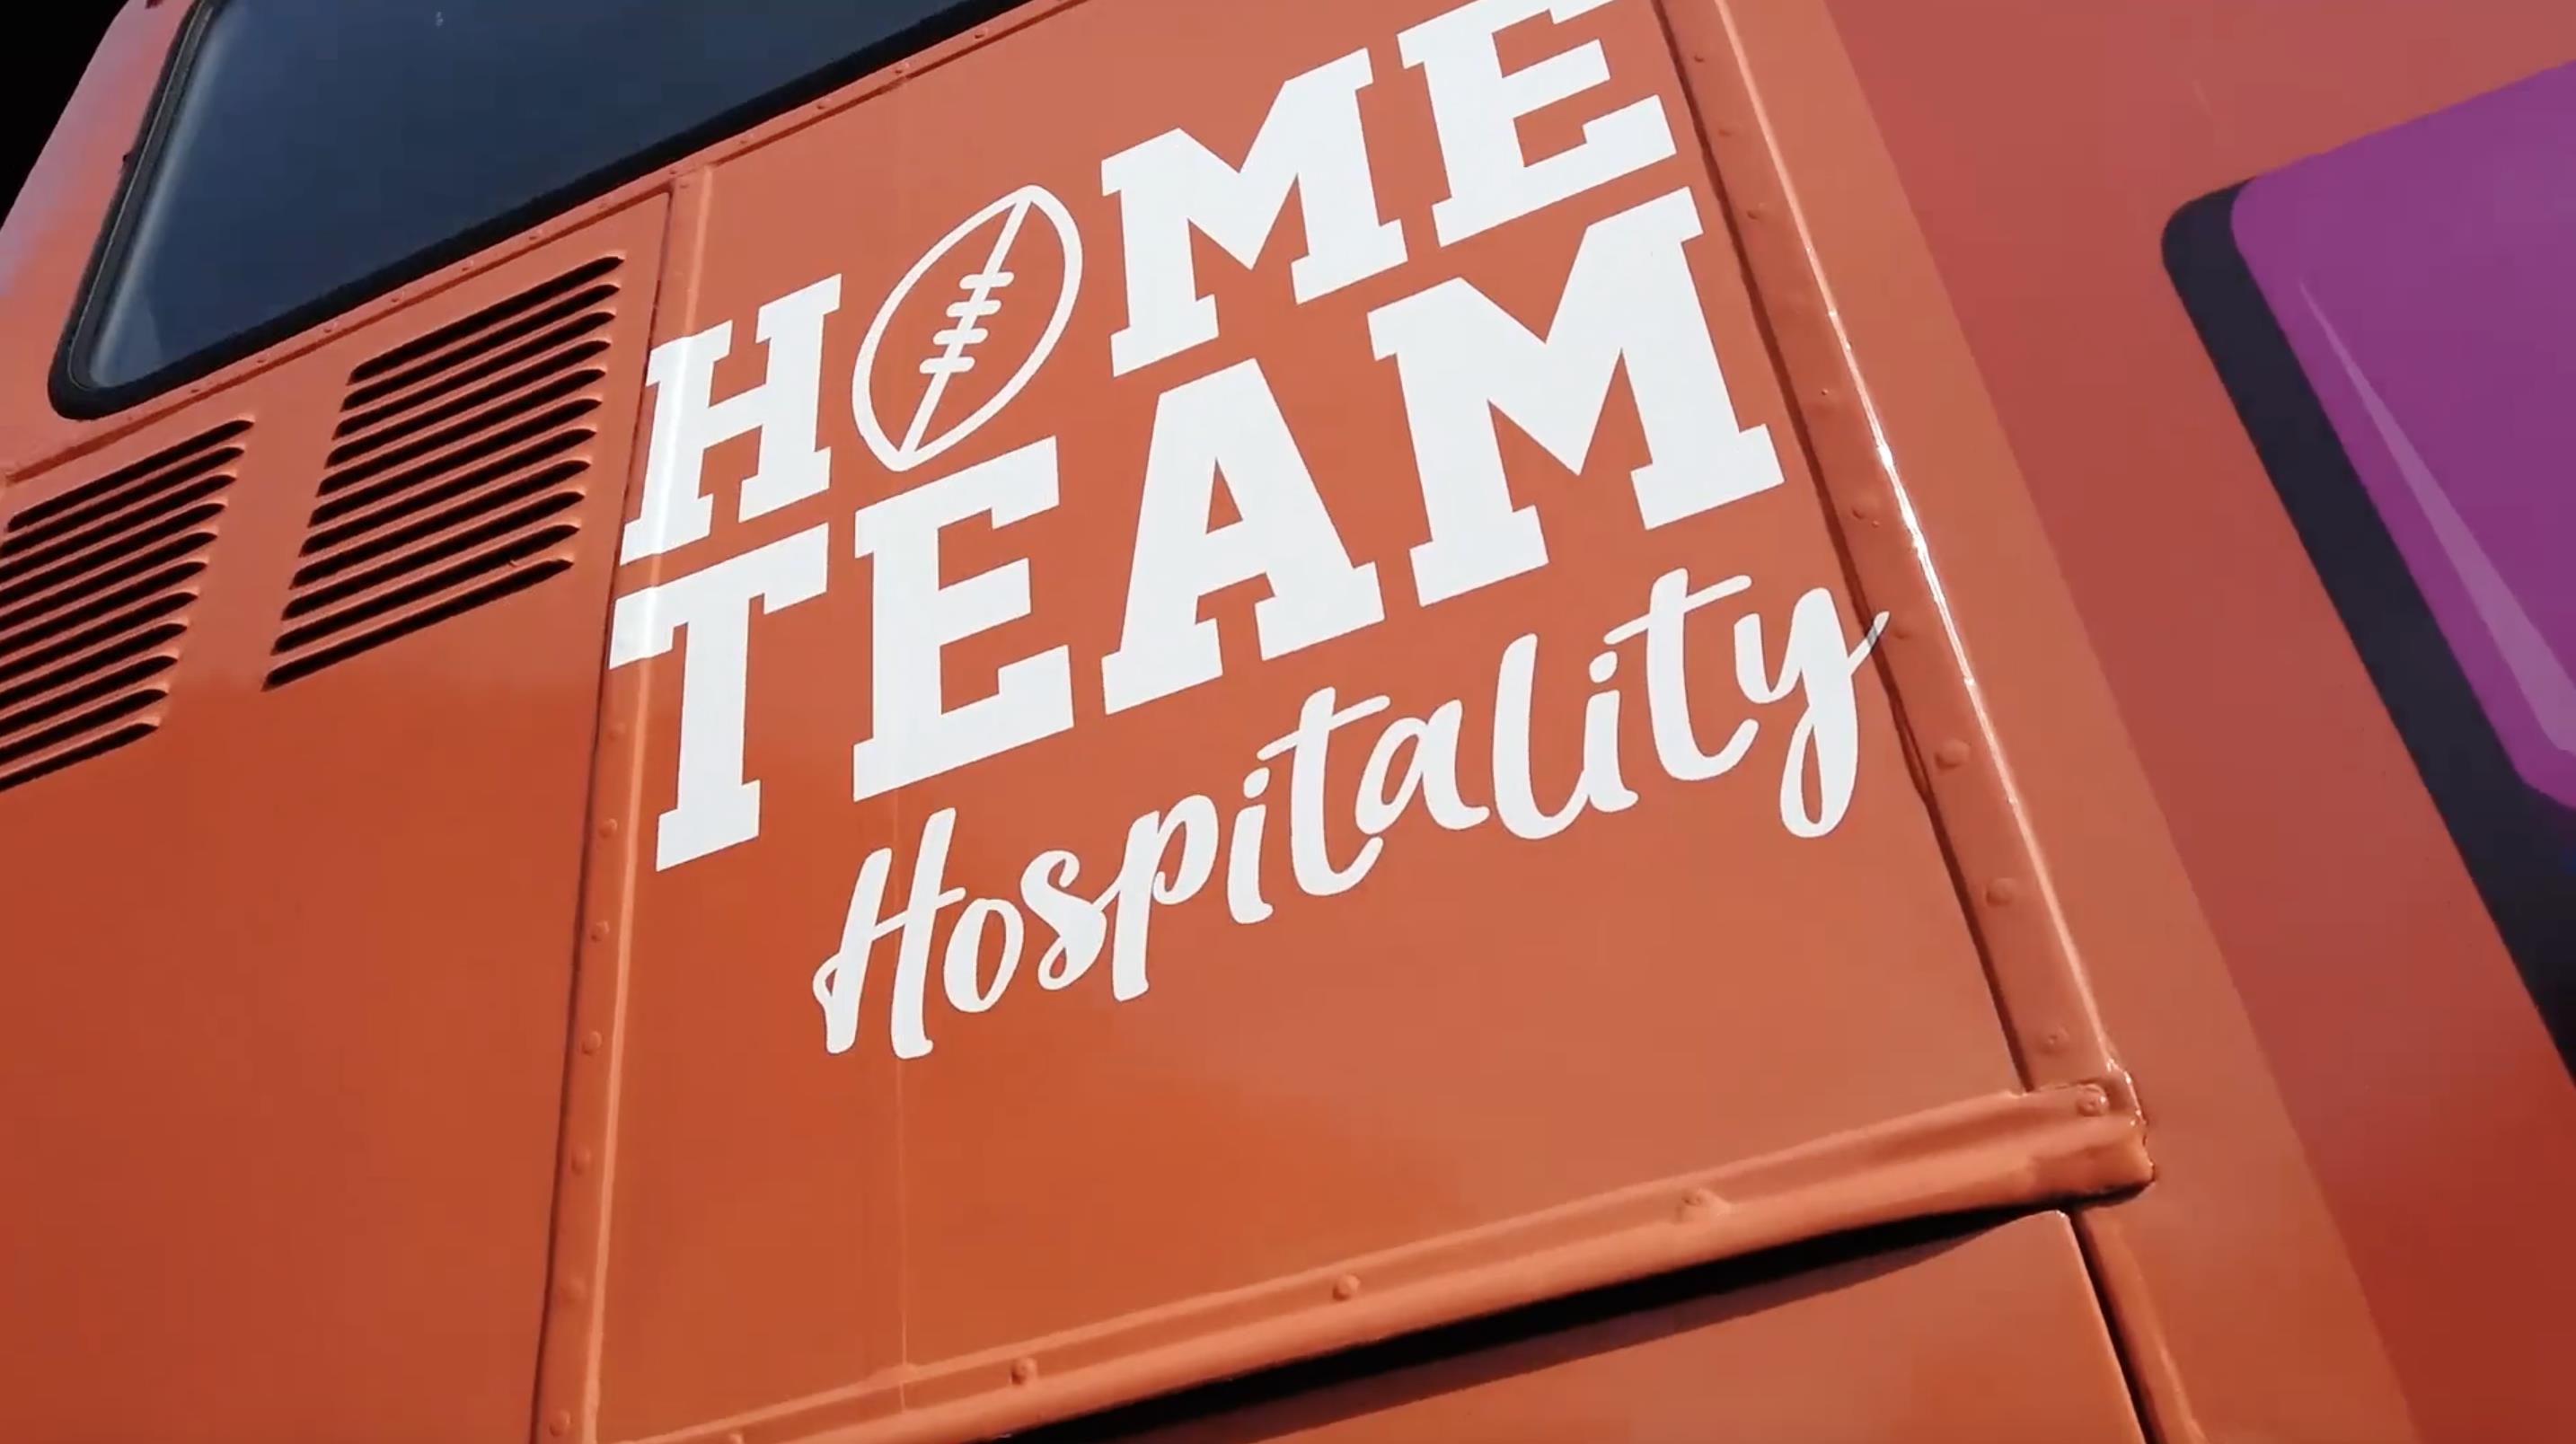 IHG - SuperBowl Home Team Hospitality